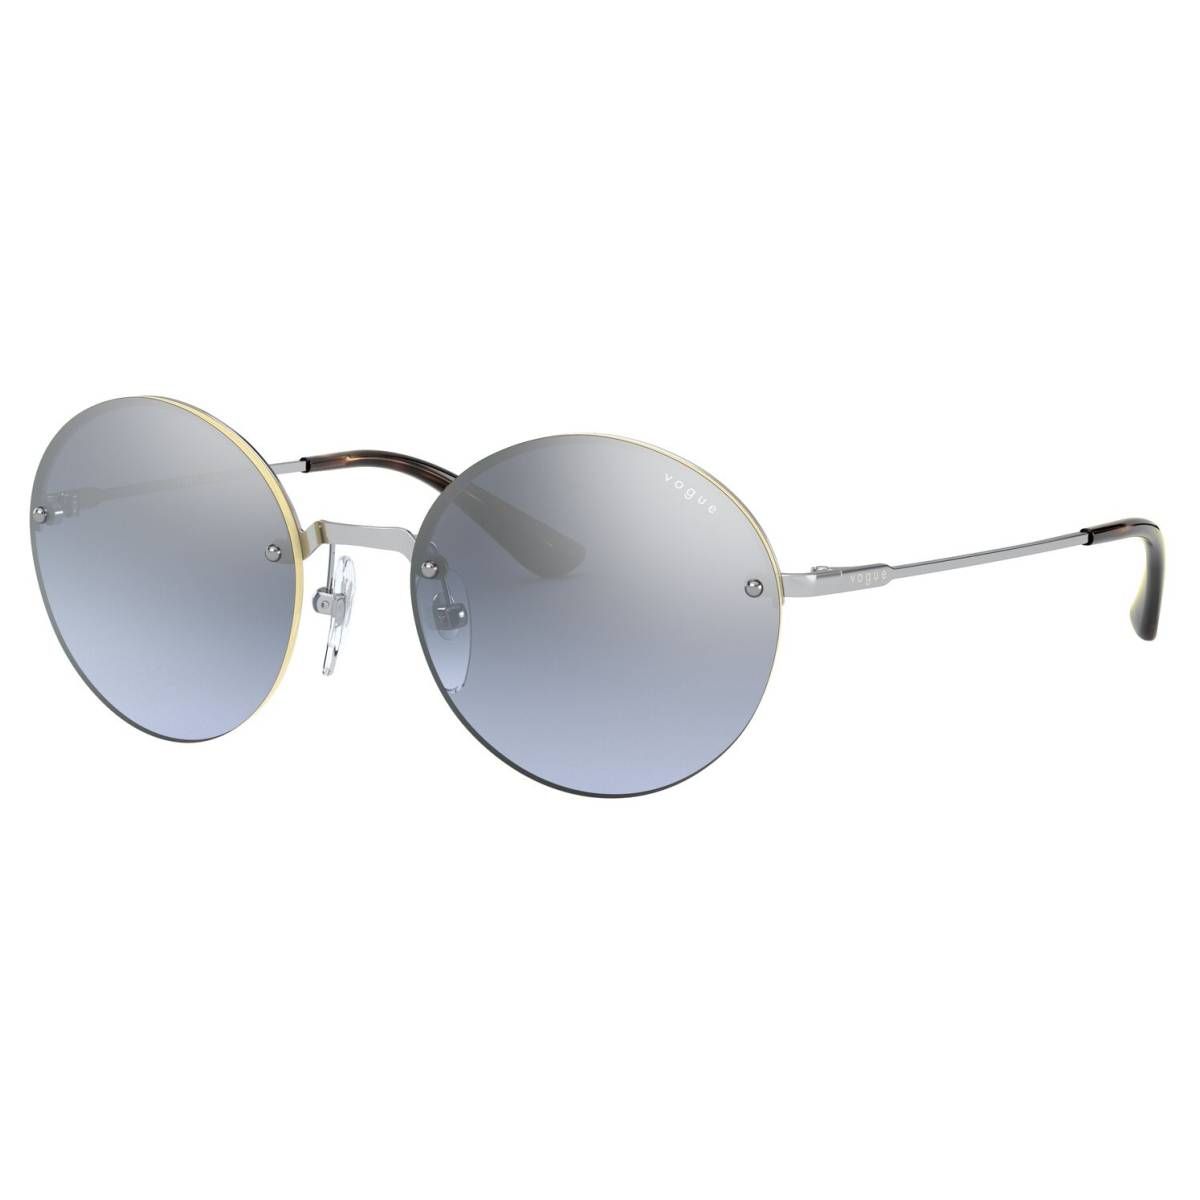 Vogue | AvramisOptics Contact Lenses, Sunglasses and Eyeglasses